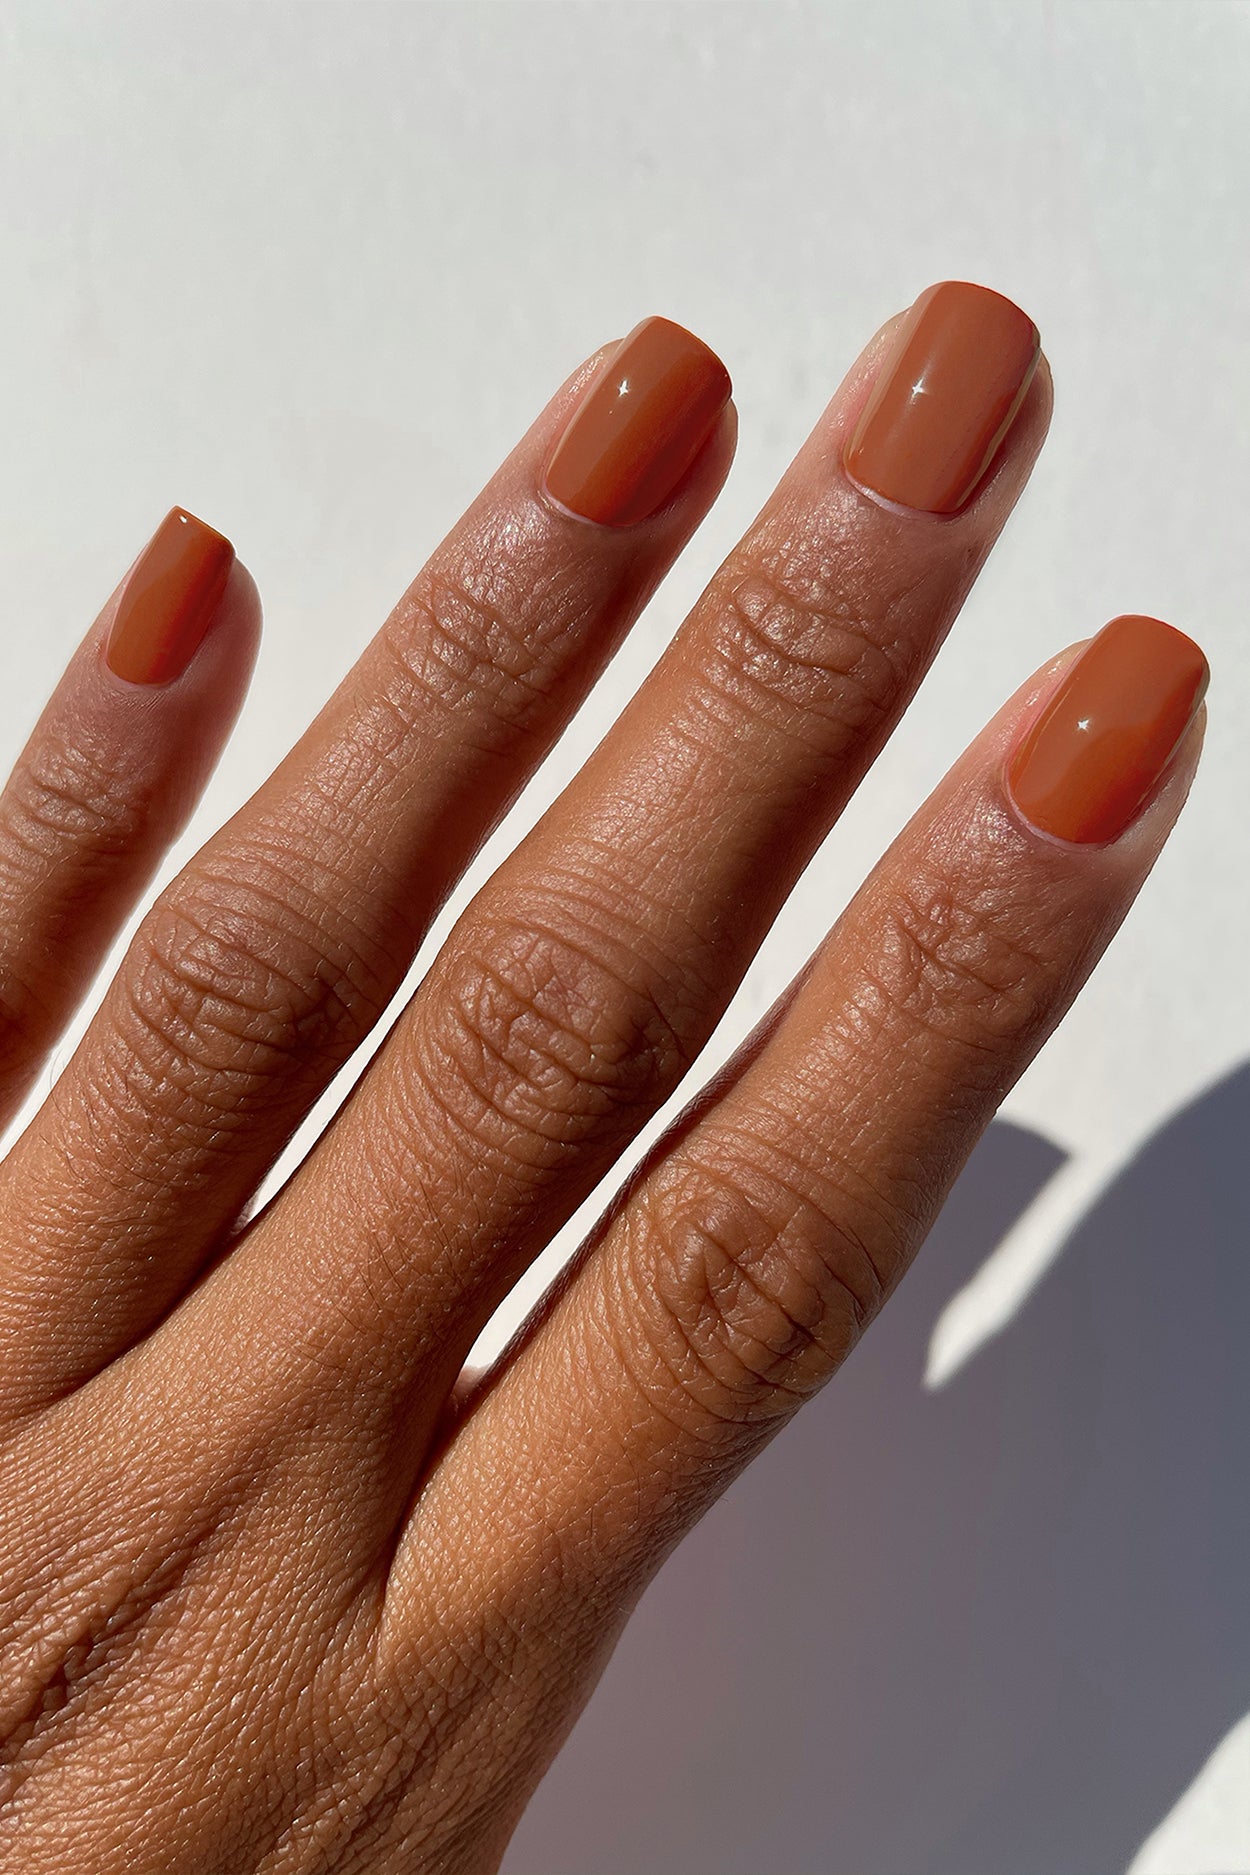 Premium Photo | Orange nail polish on long nails on a dark background.